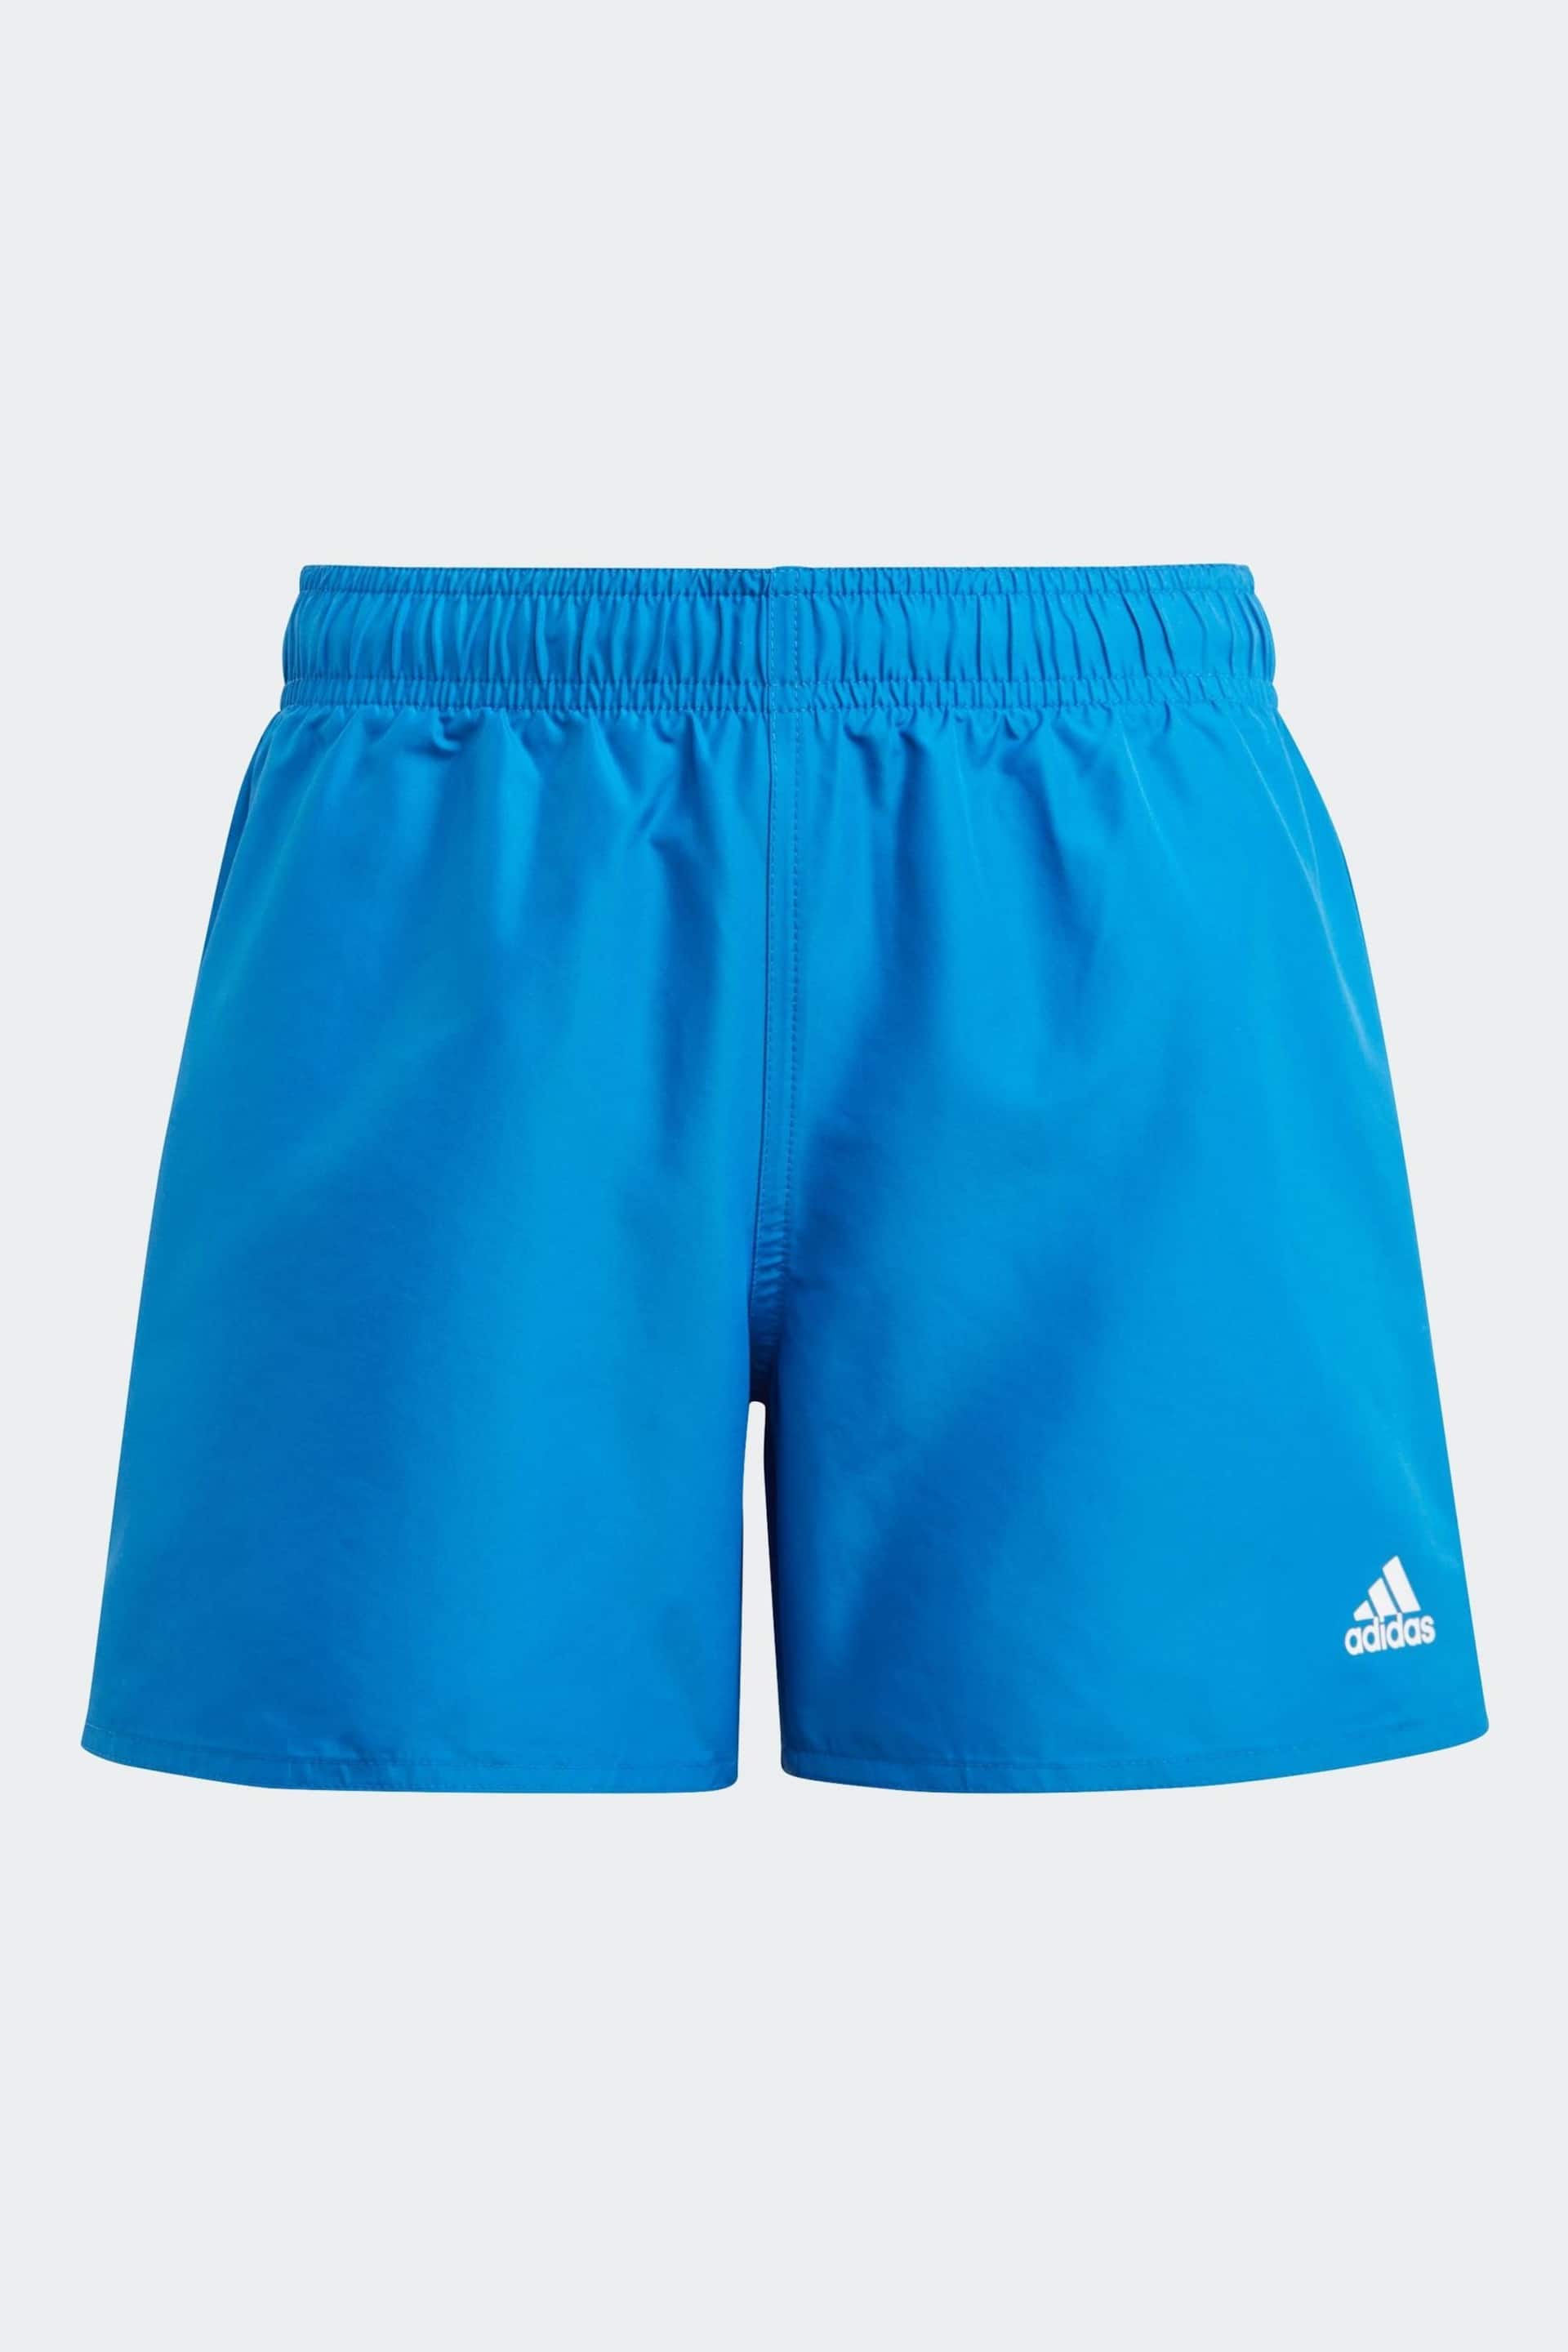 adidas Bright Blue Classic Badge Of Sport Swim Shorts - Image 1 of 5